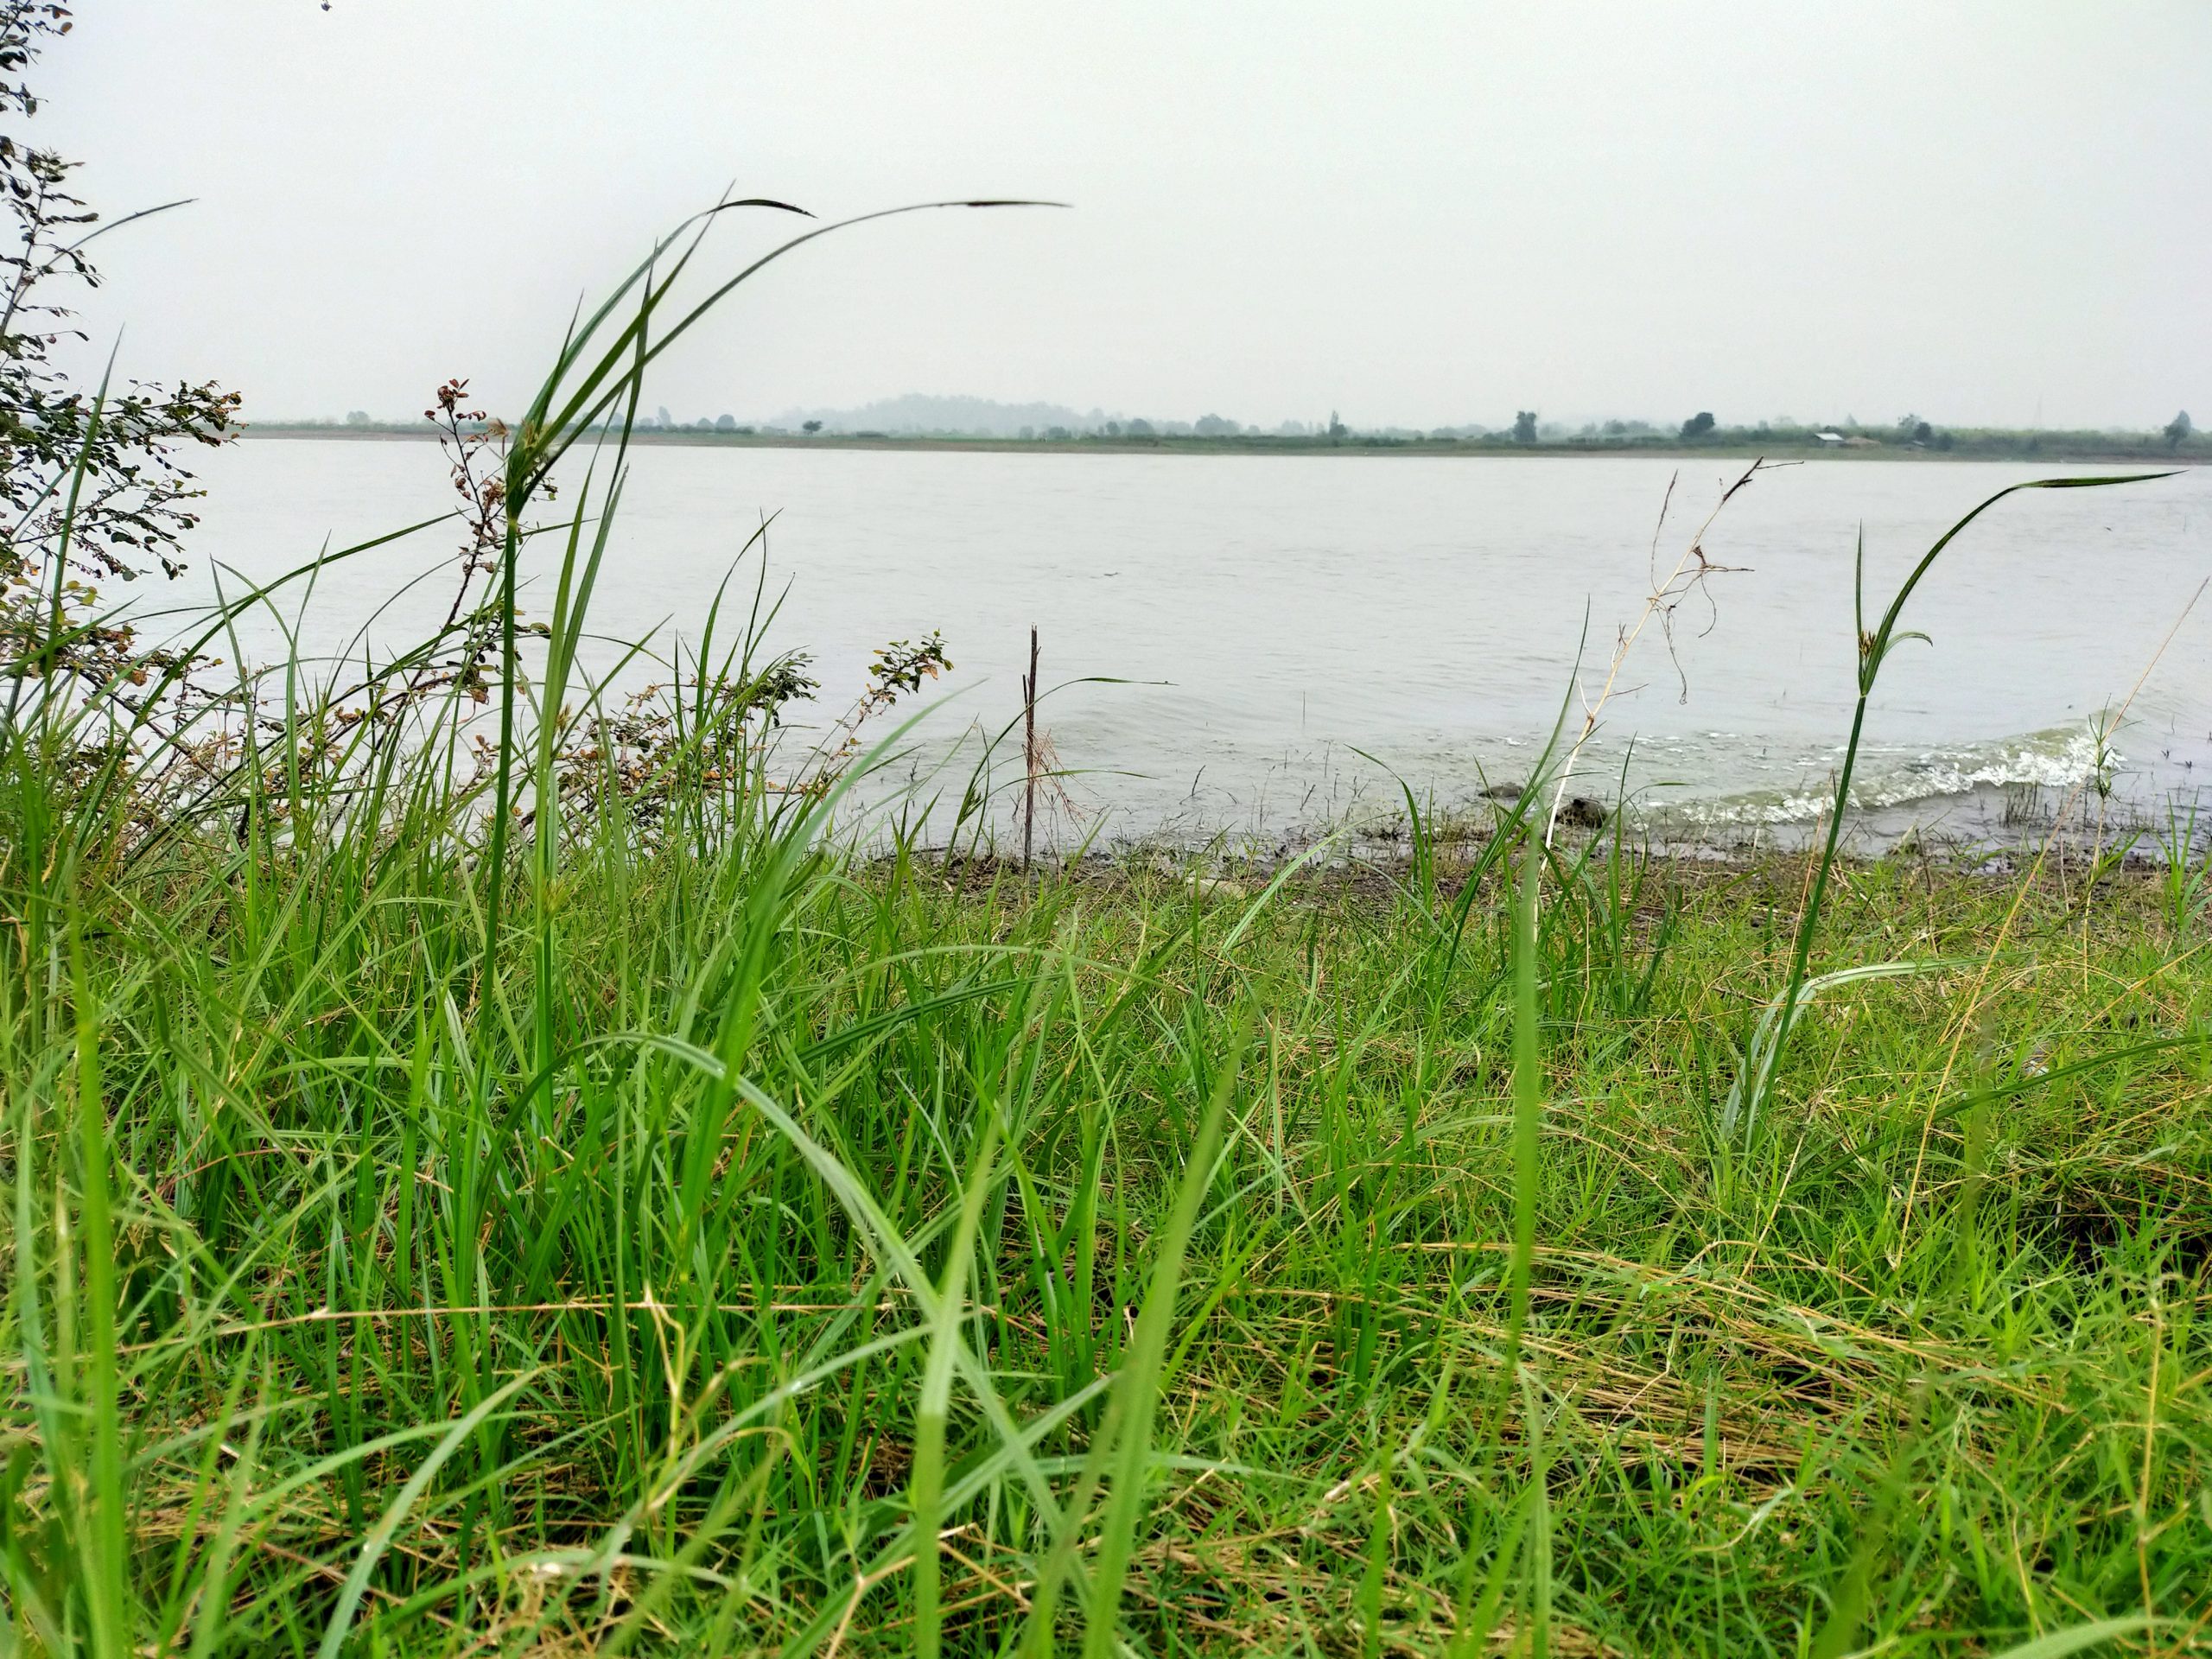 Grass at a riverbank